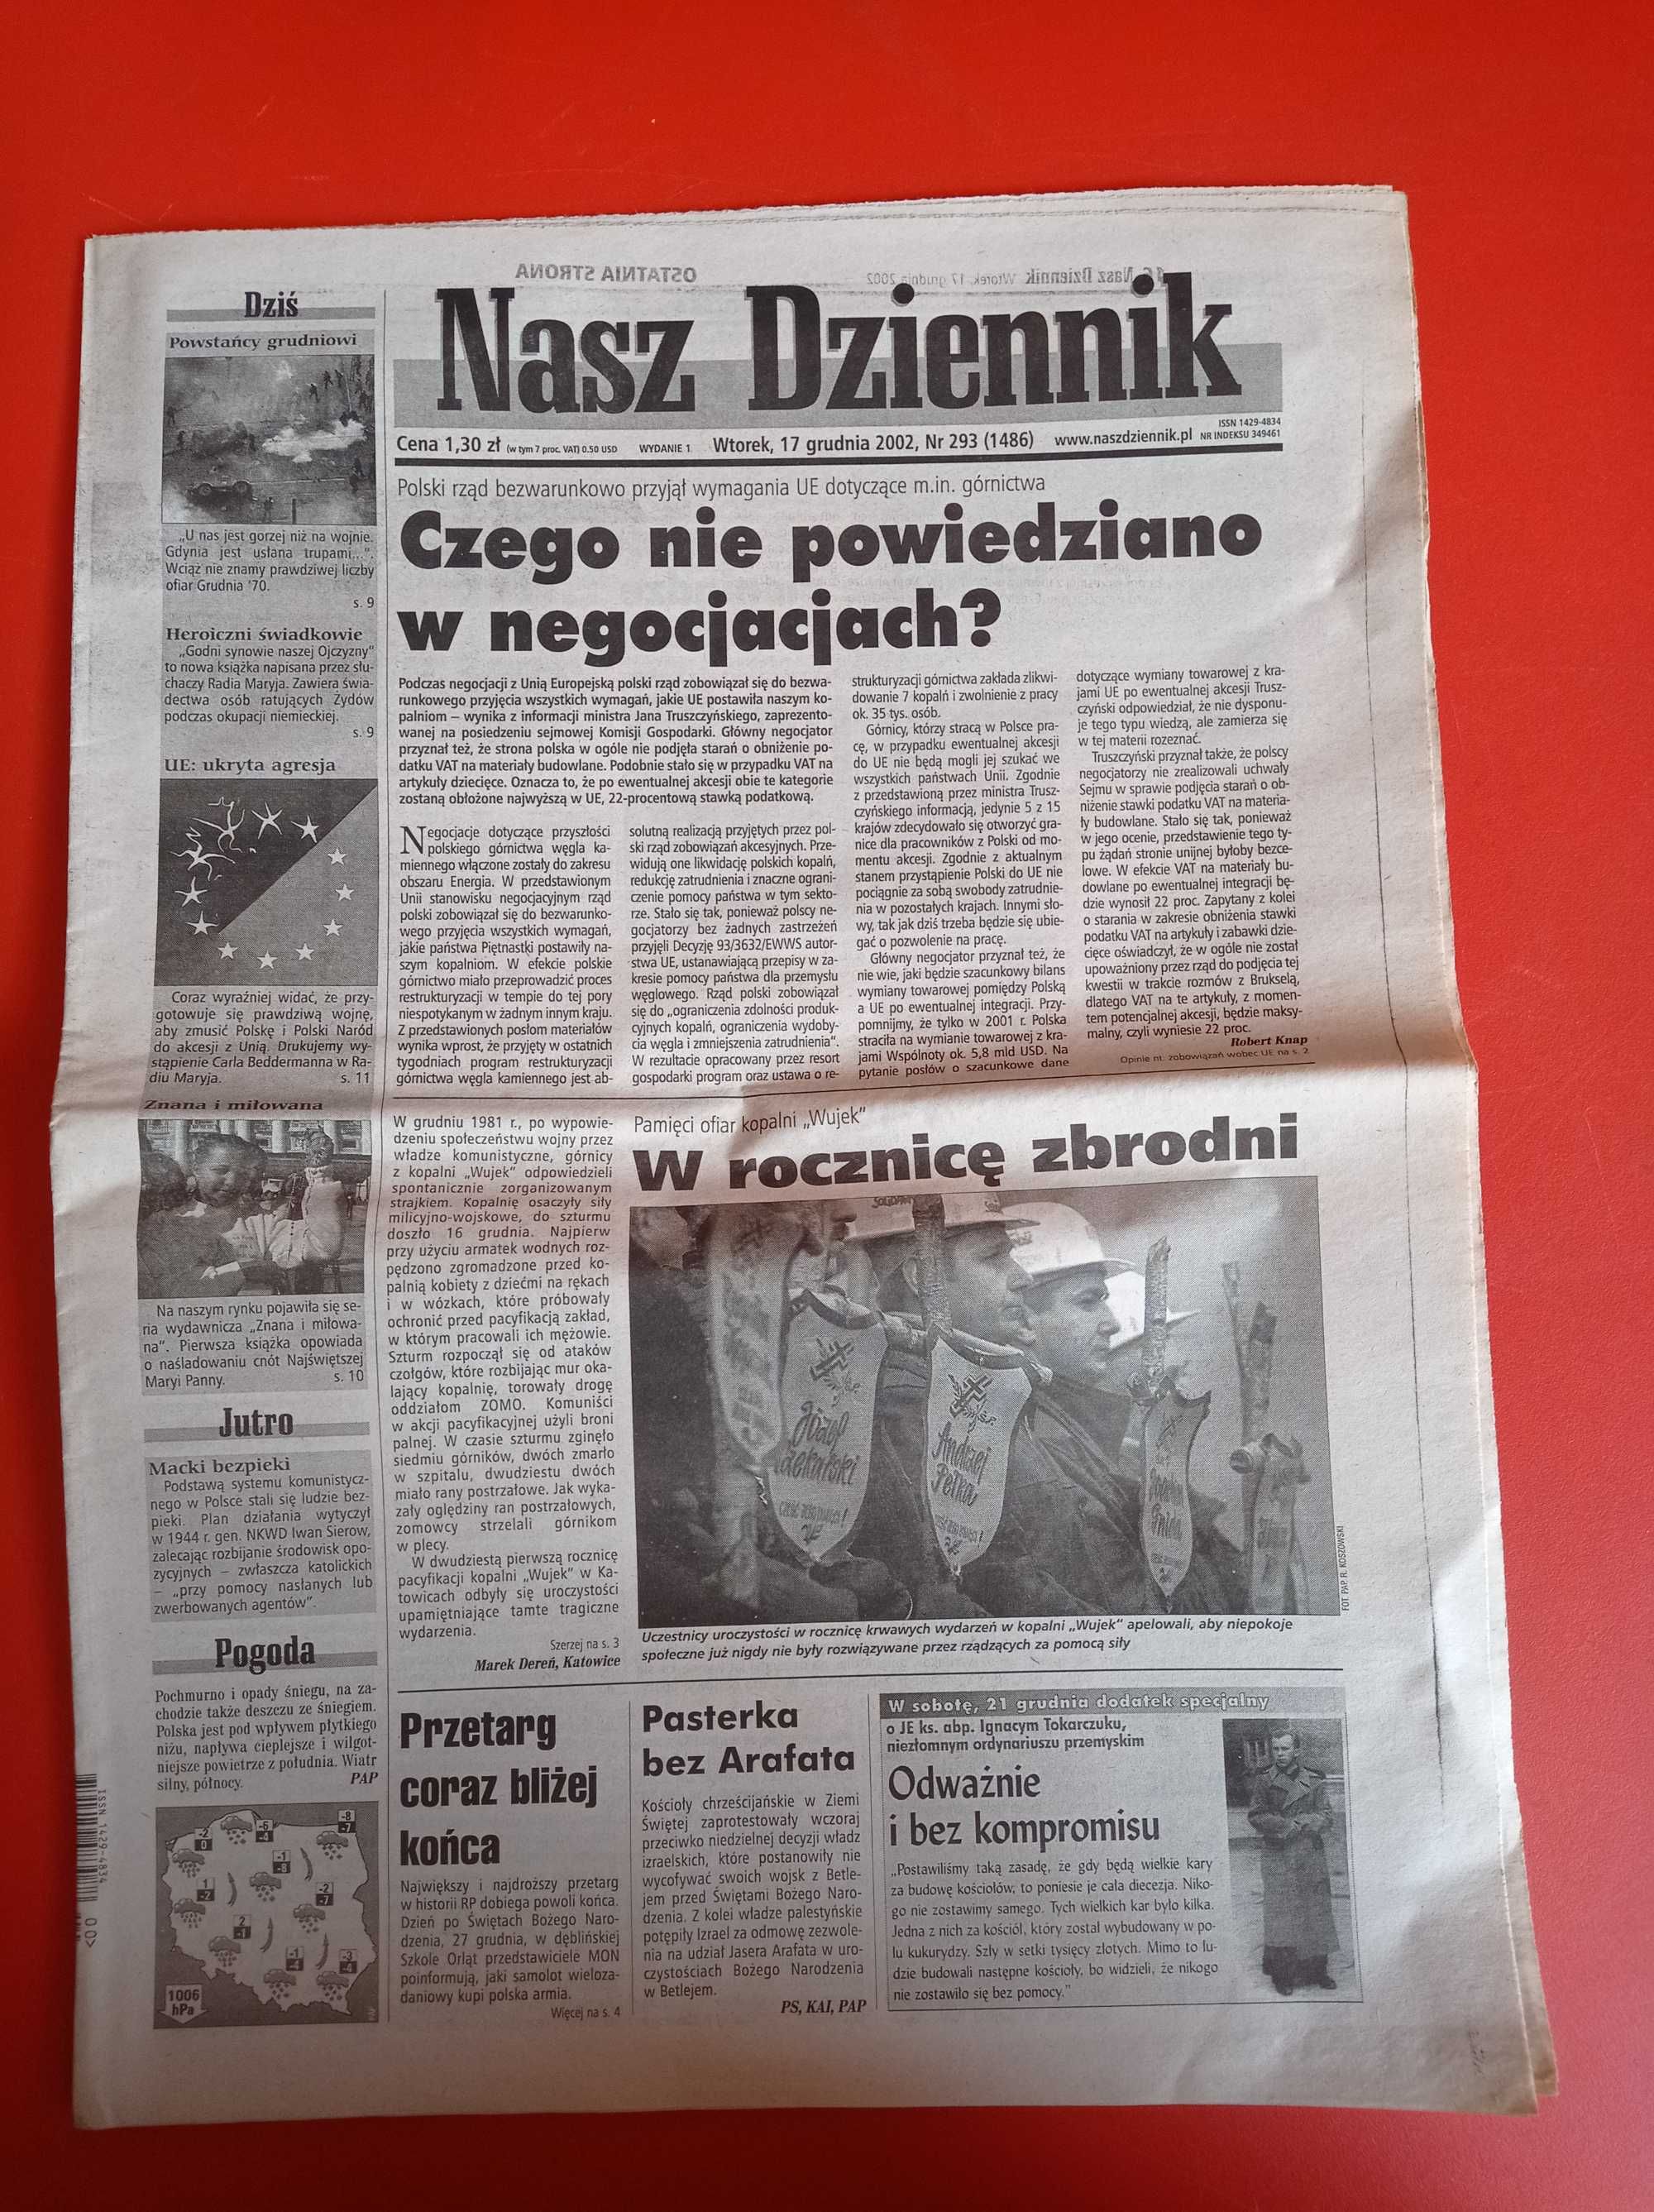 Nasz Dziennik, nr 293/2002, 17 grudnia 2002